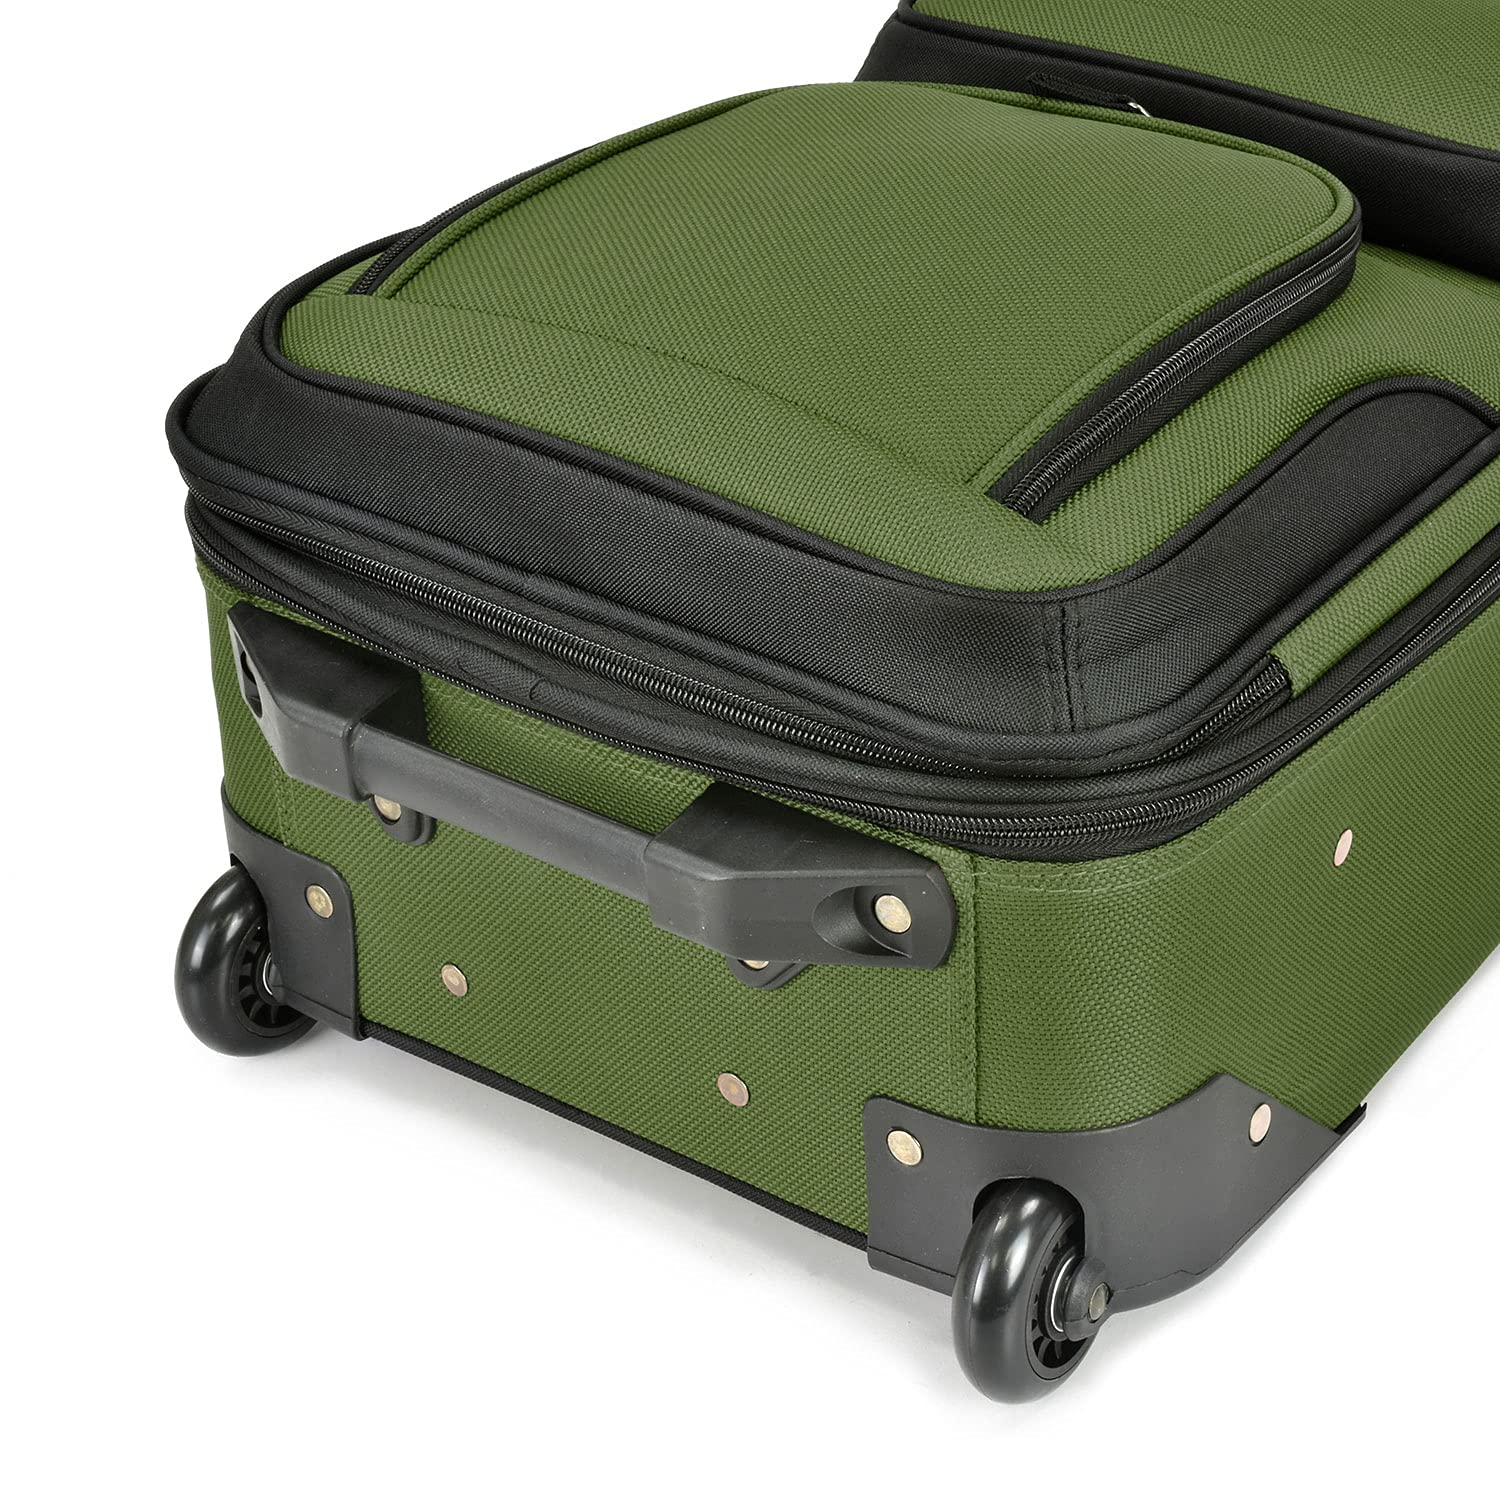 U.S. Traveler Rio Fabric Expandable Carry-on Luggage, Green, 2 Wheel